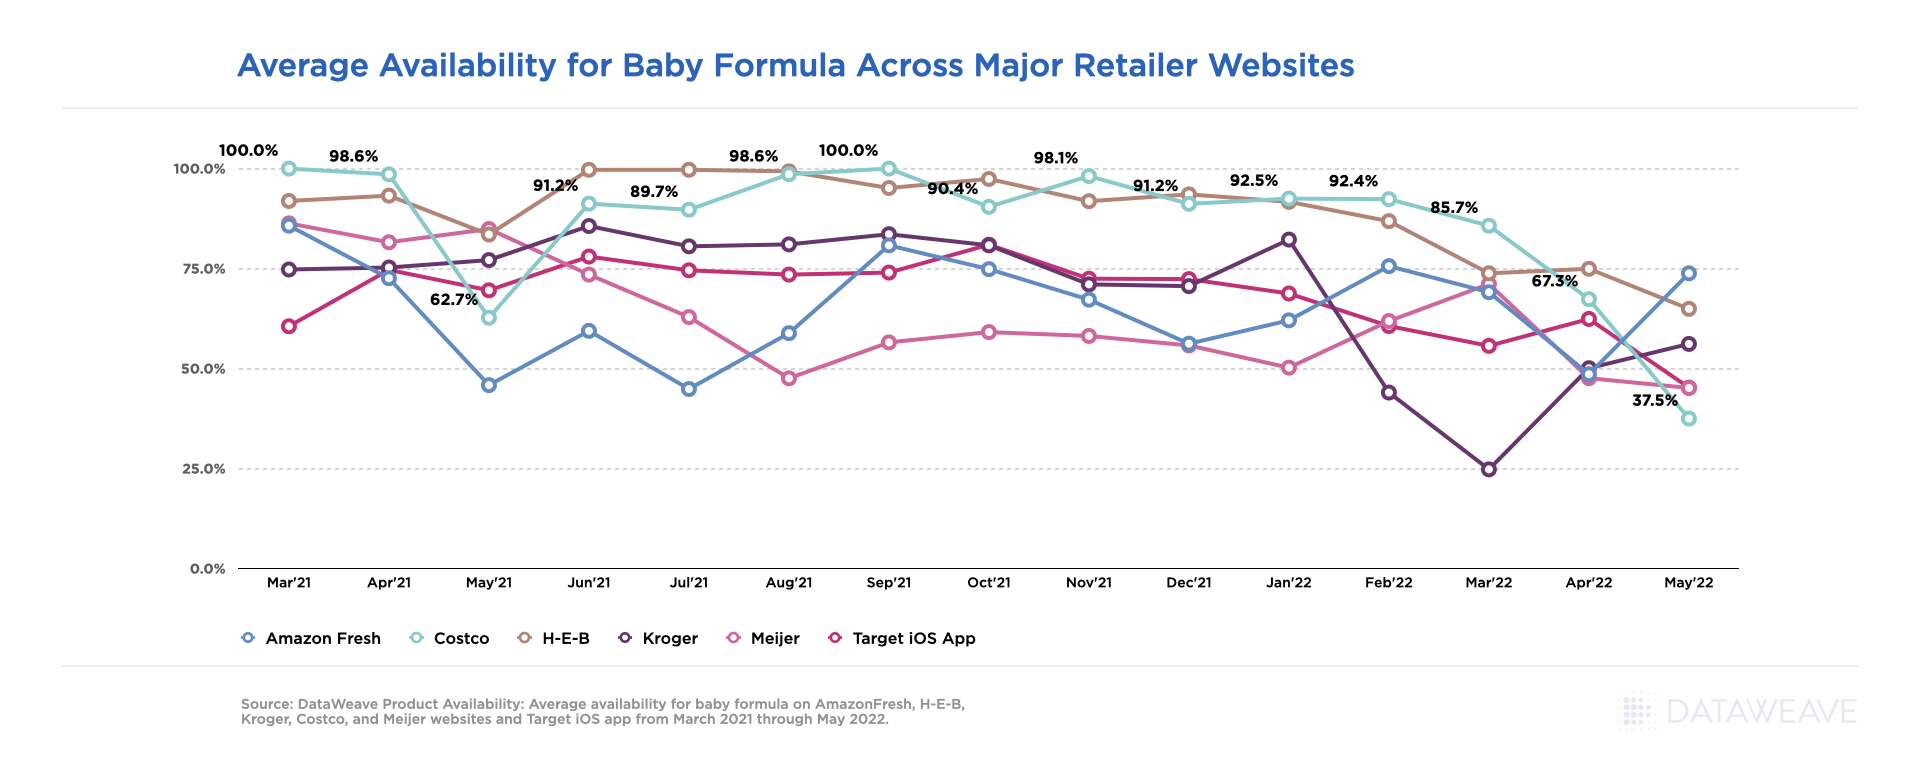 Average Availability for Baby Formula Across Major Retailer Websites